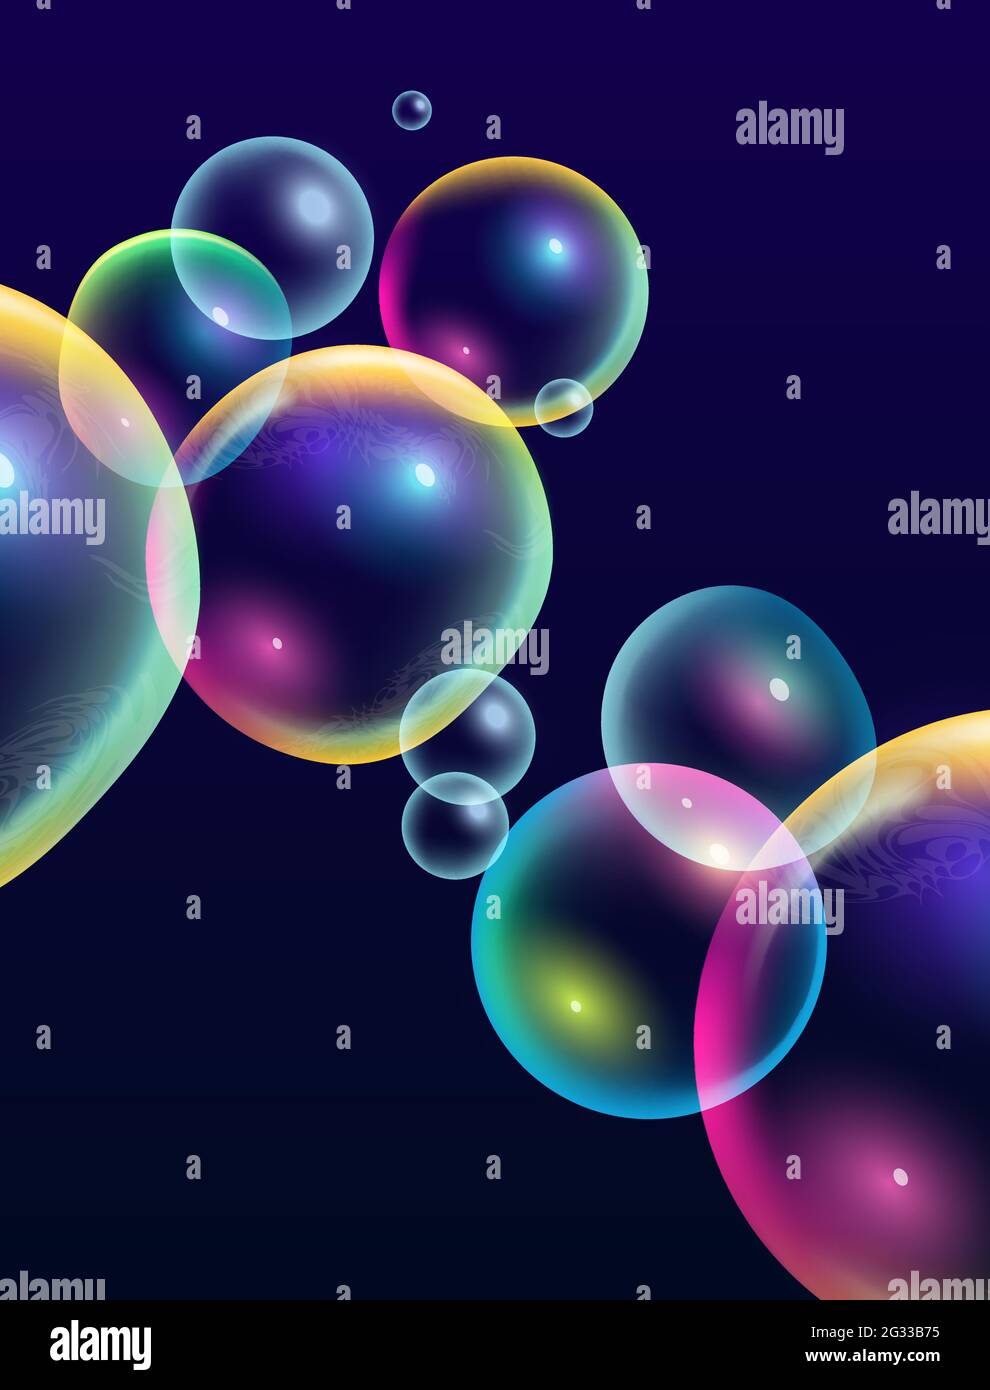 Kreative bunte abstrakte Regenbogen Blasen Hintergrund. Vektorgrafik. Stock Vektor